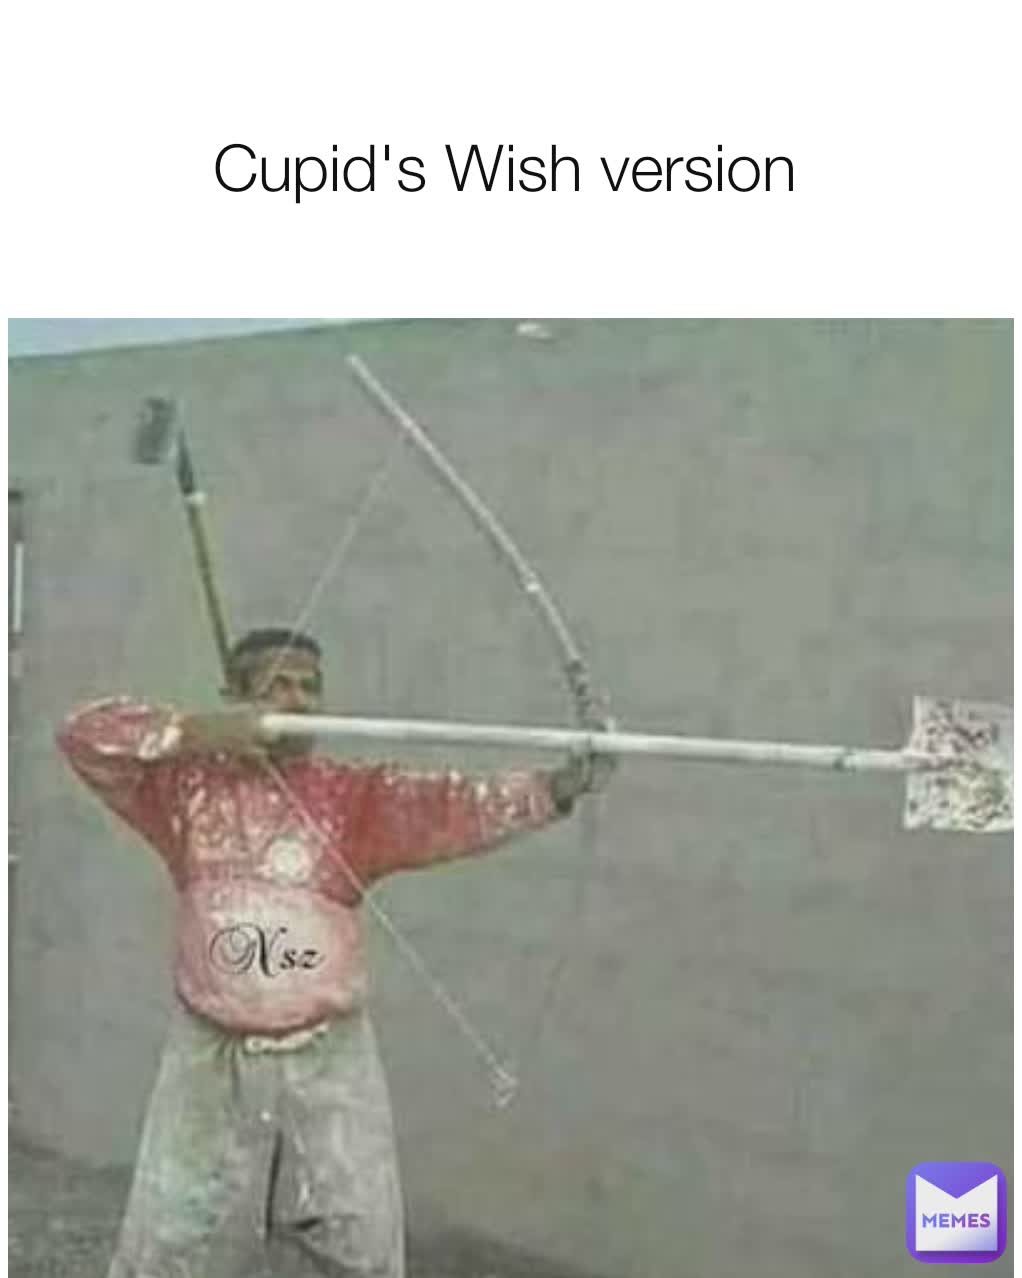 Cupid's Wish version

